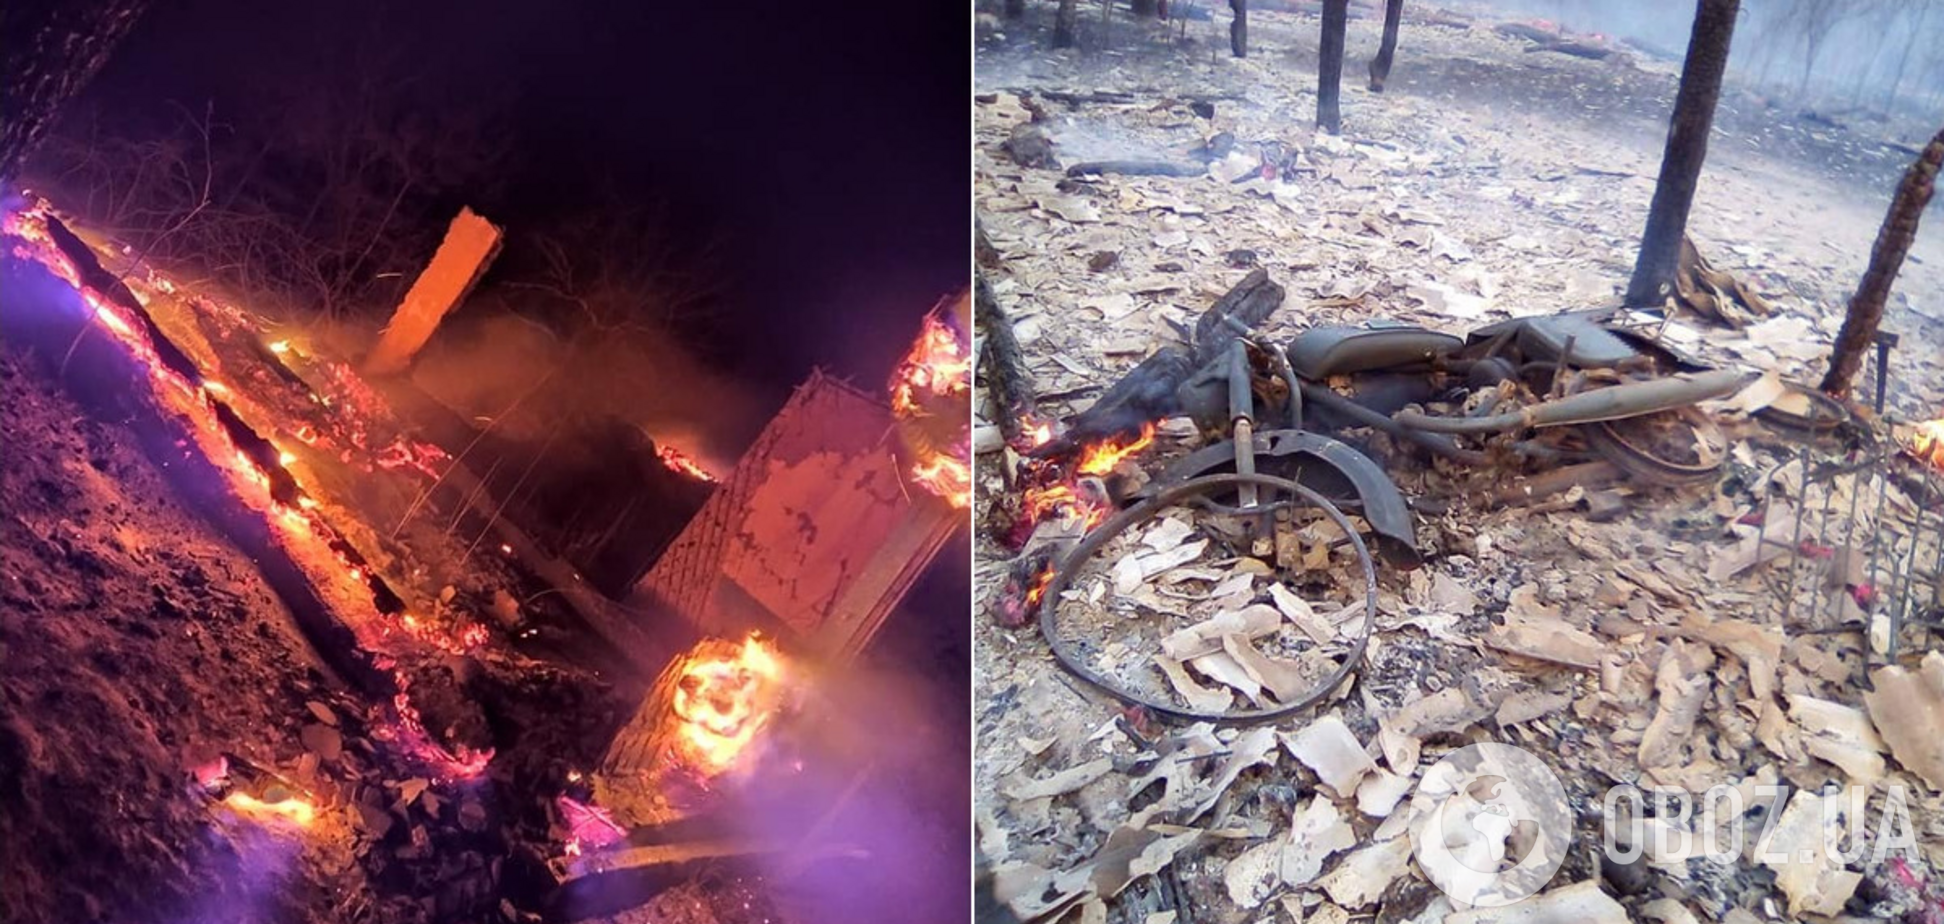 Леса на Житомирщине горят из-за добычи янтаря – Тышкевич